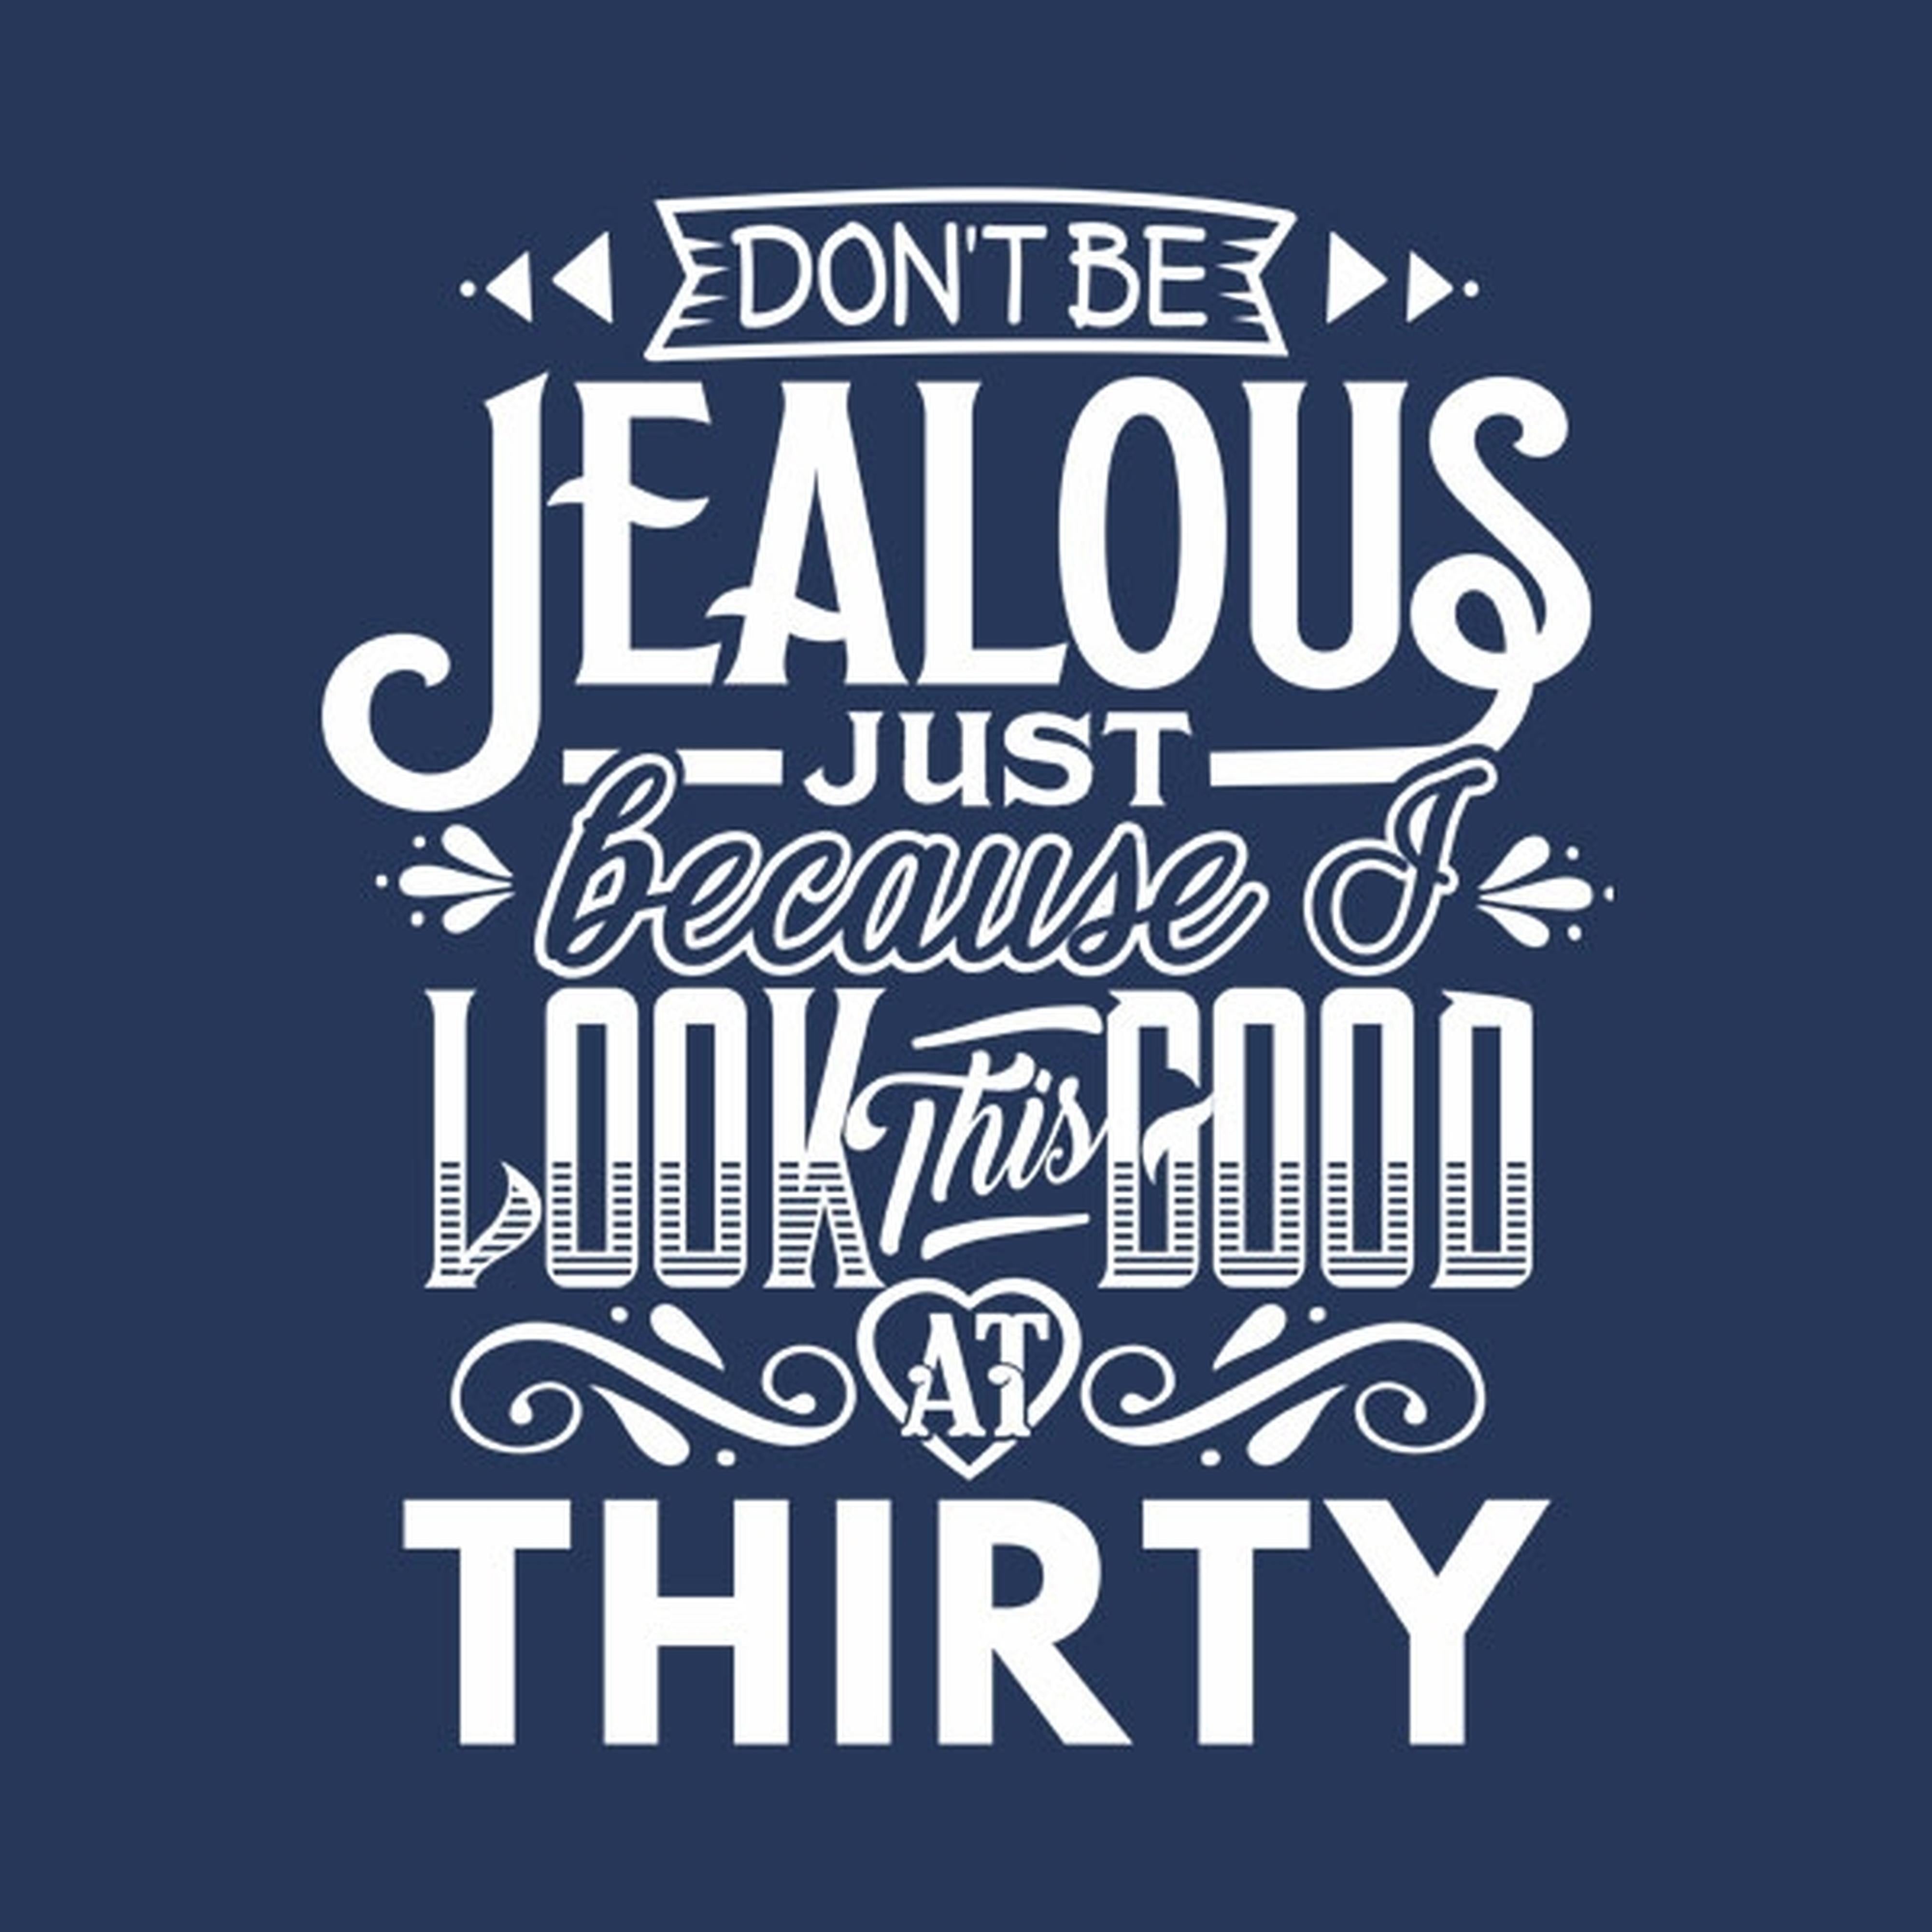 Don't be jealous - 30th birthday - T-shirt